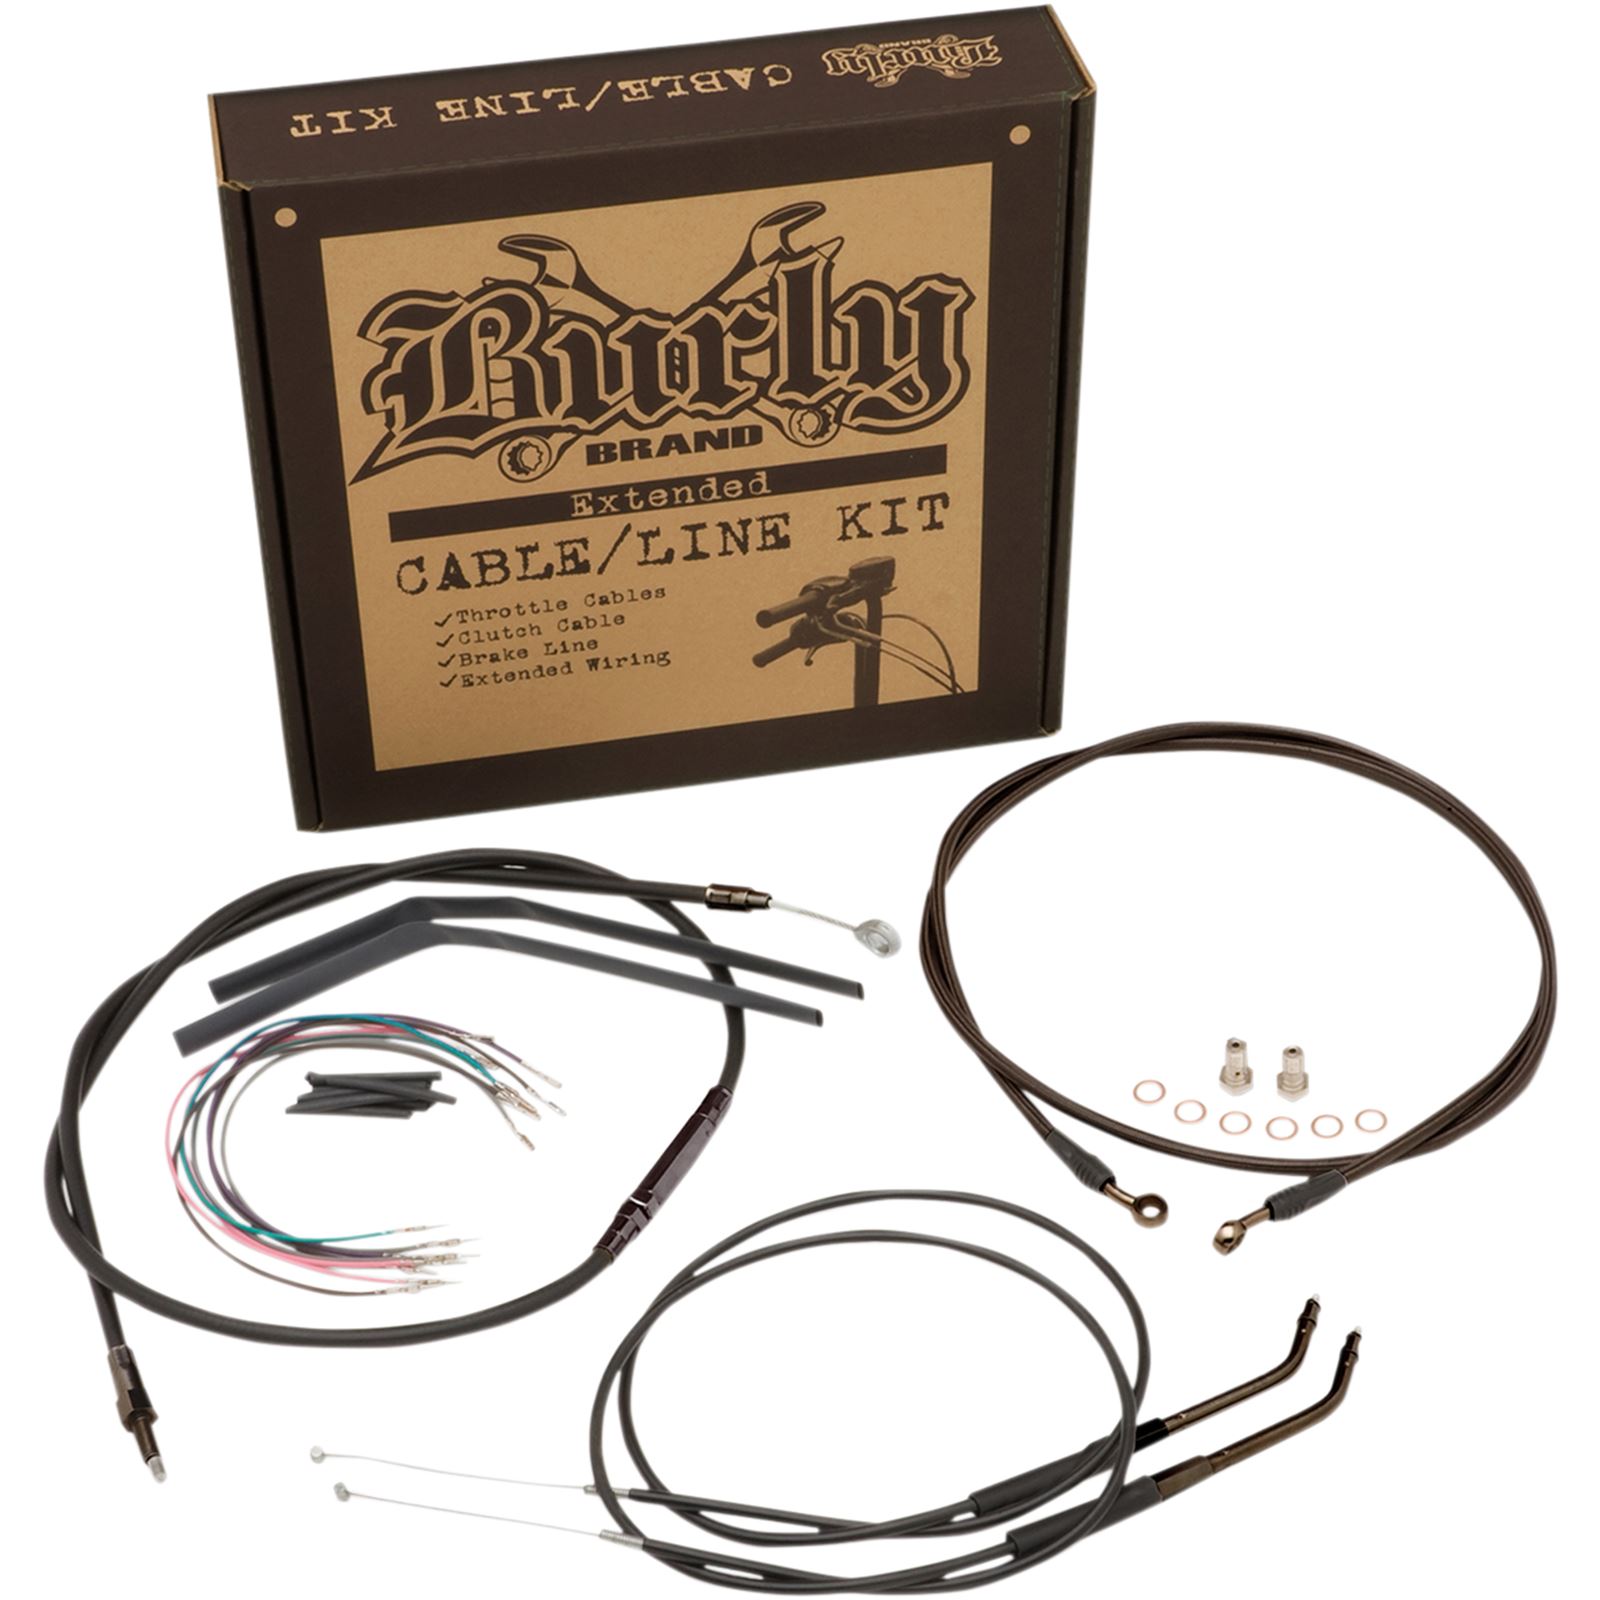 Burly Brand Vinyl Jail Bar Cable Kit For 14" Handlebars fits '07-11 FXD OPEN BOX